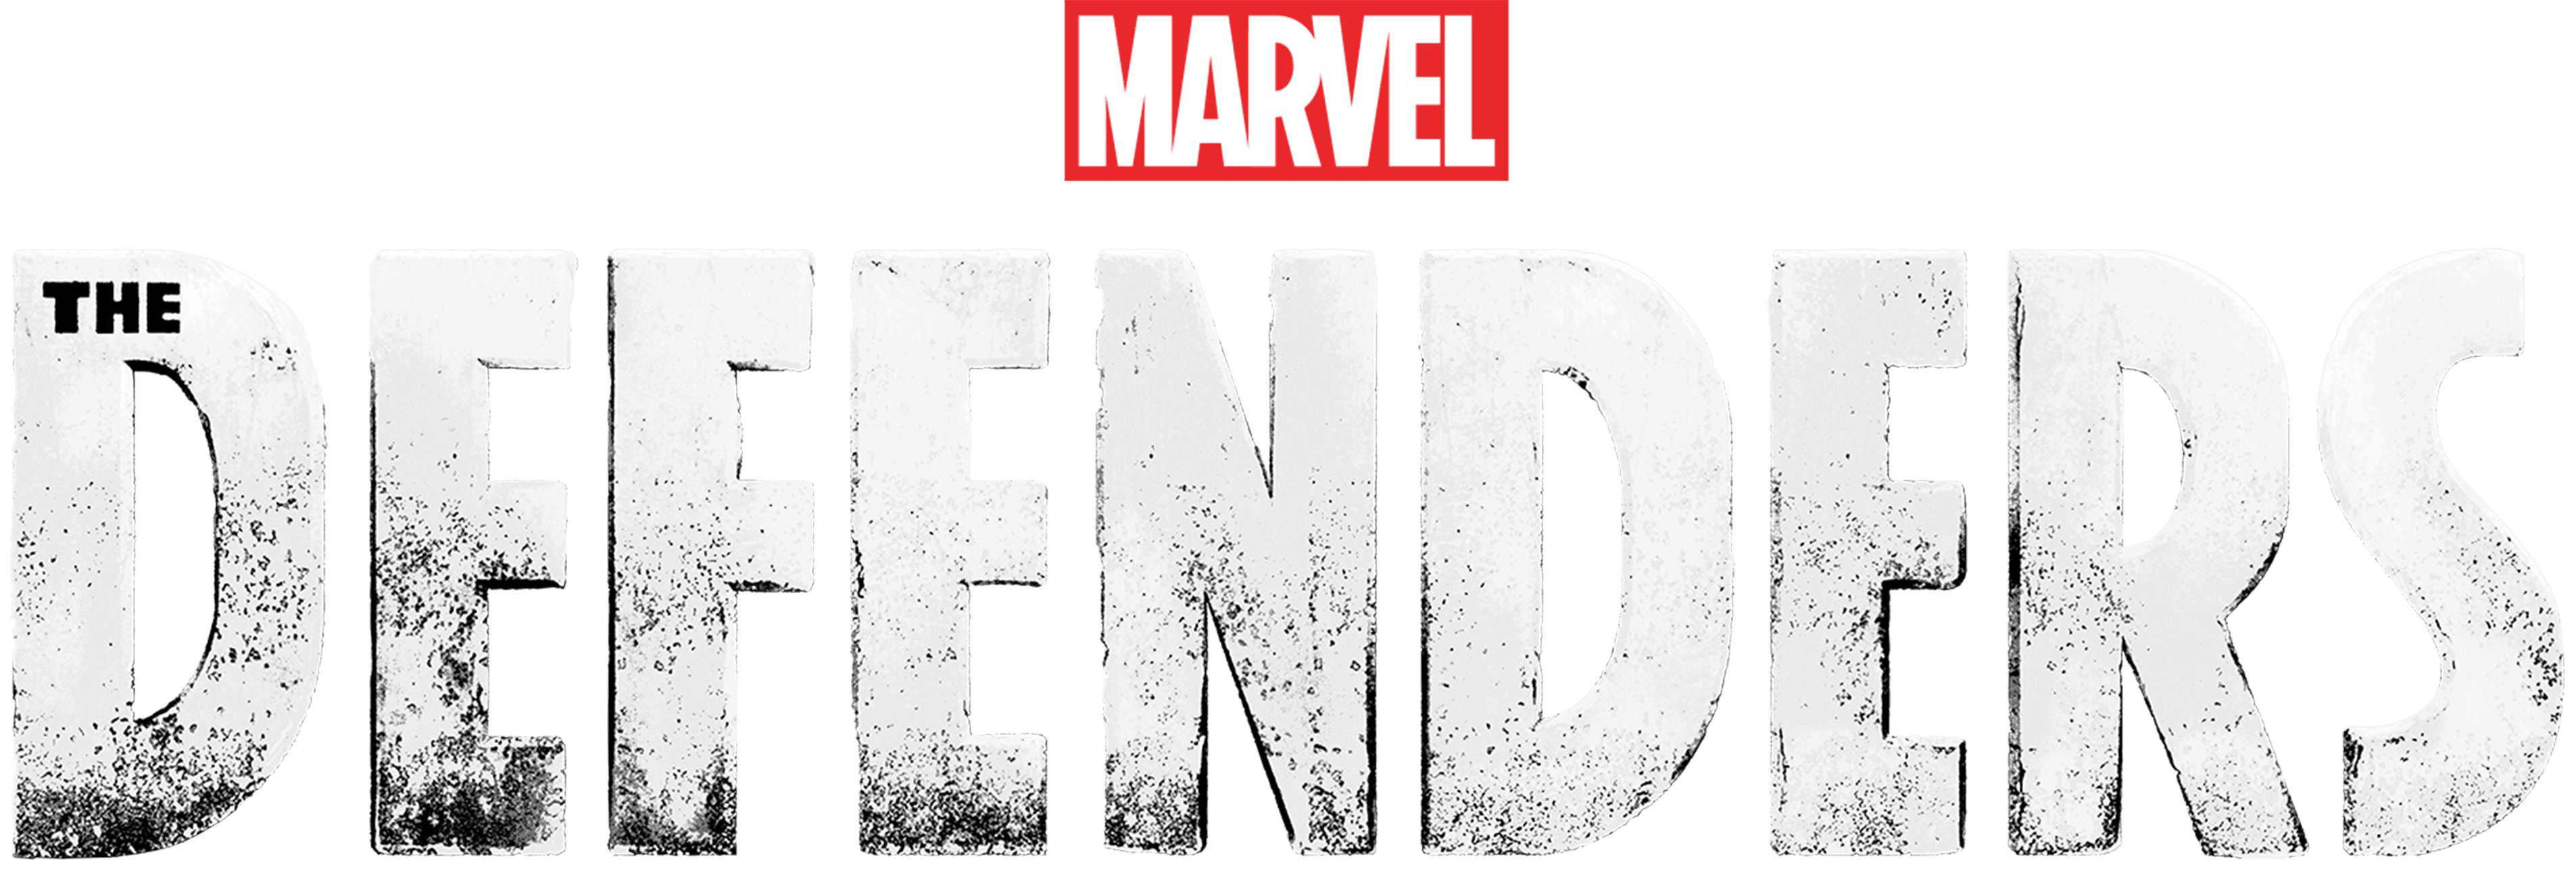 Marvel's The Defenders logo